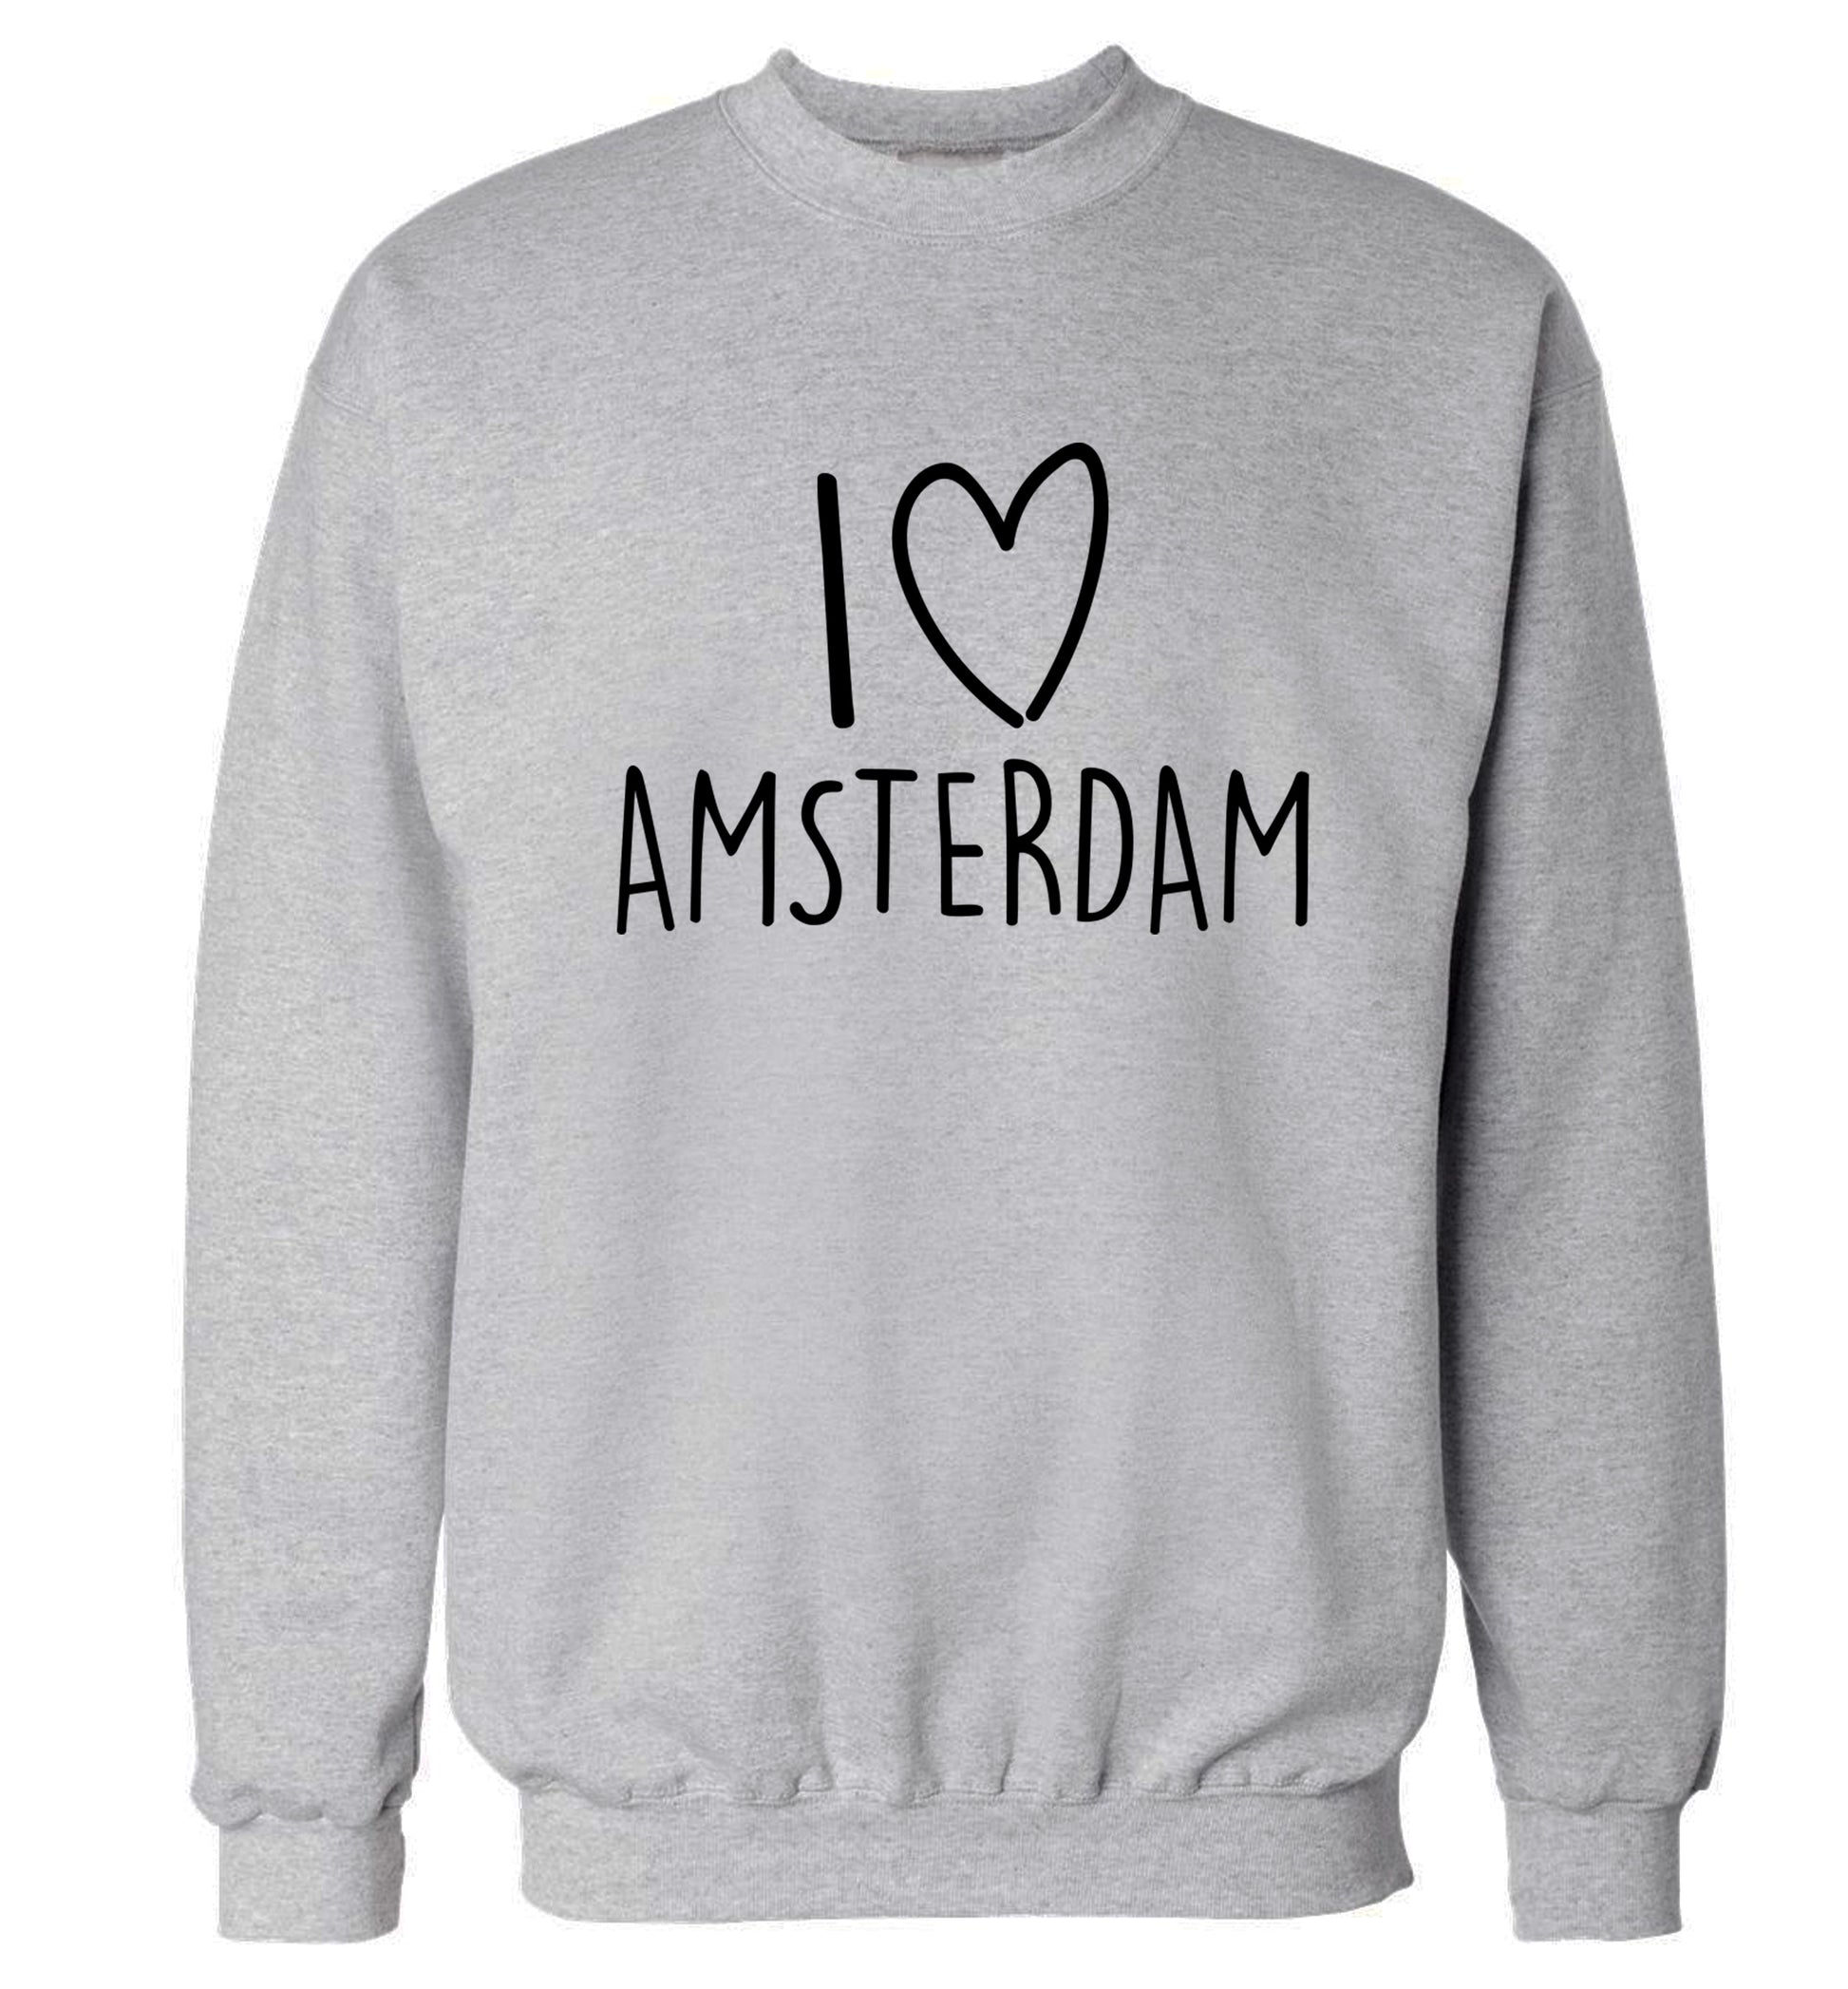 I love Amsterdam Adult's unisex grey Sweater 2XL